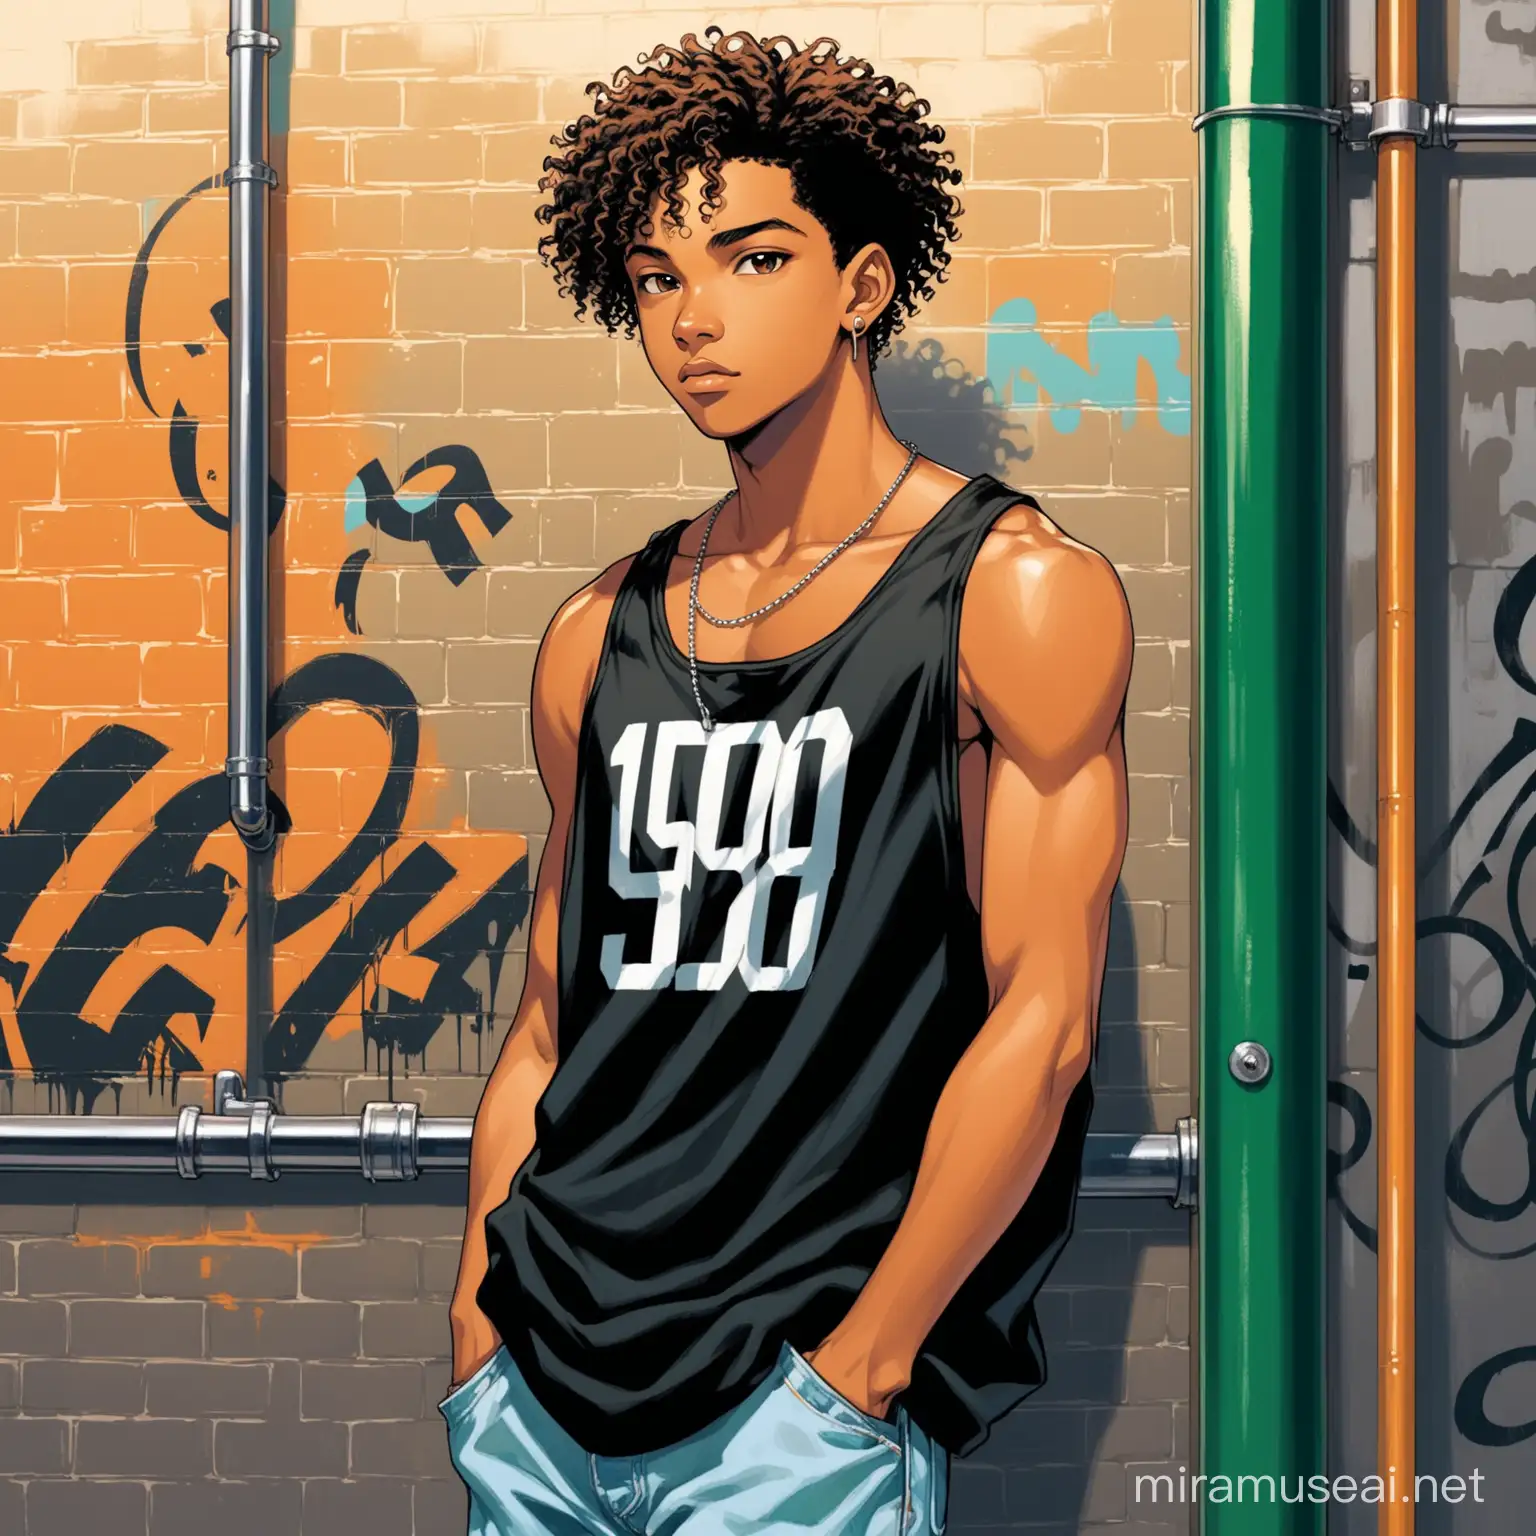 Stylish African American Teenager in 1990s New York Subway Graffiti Scene